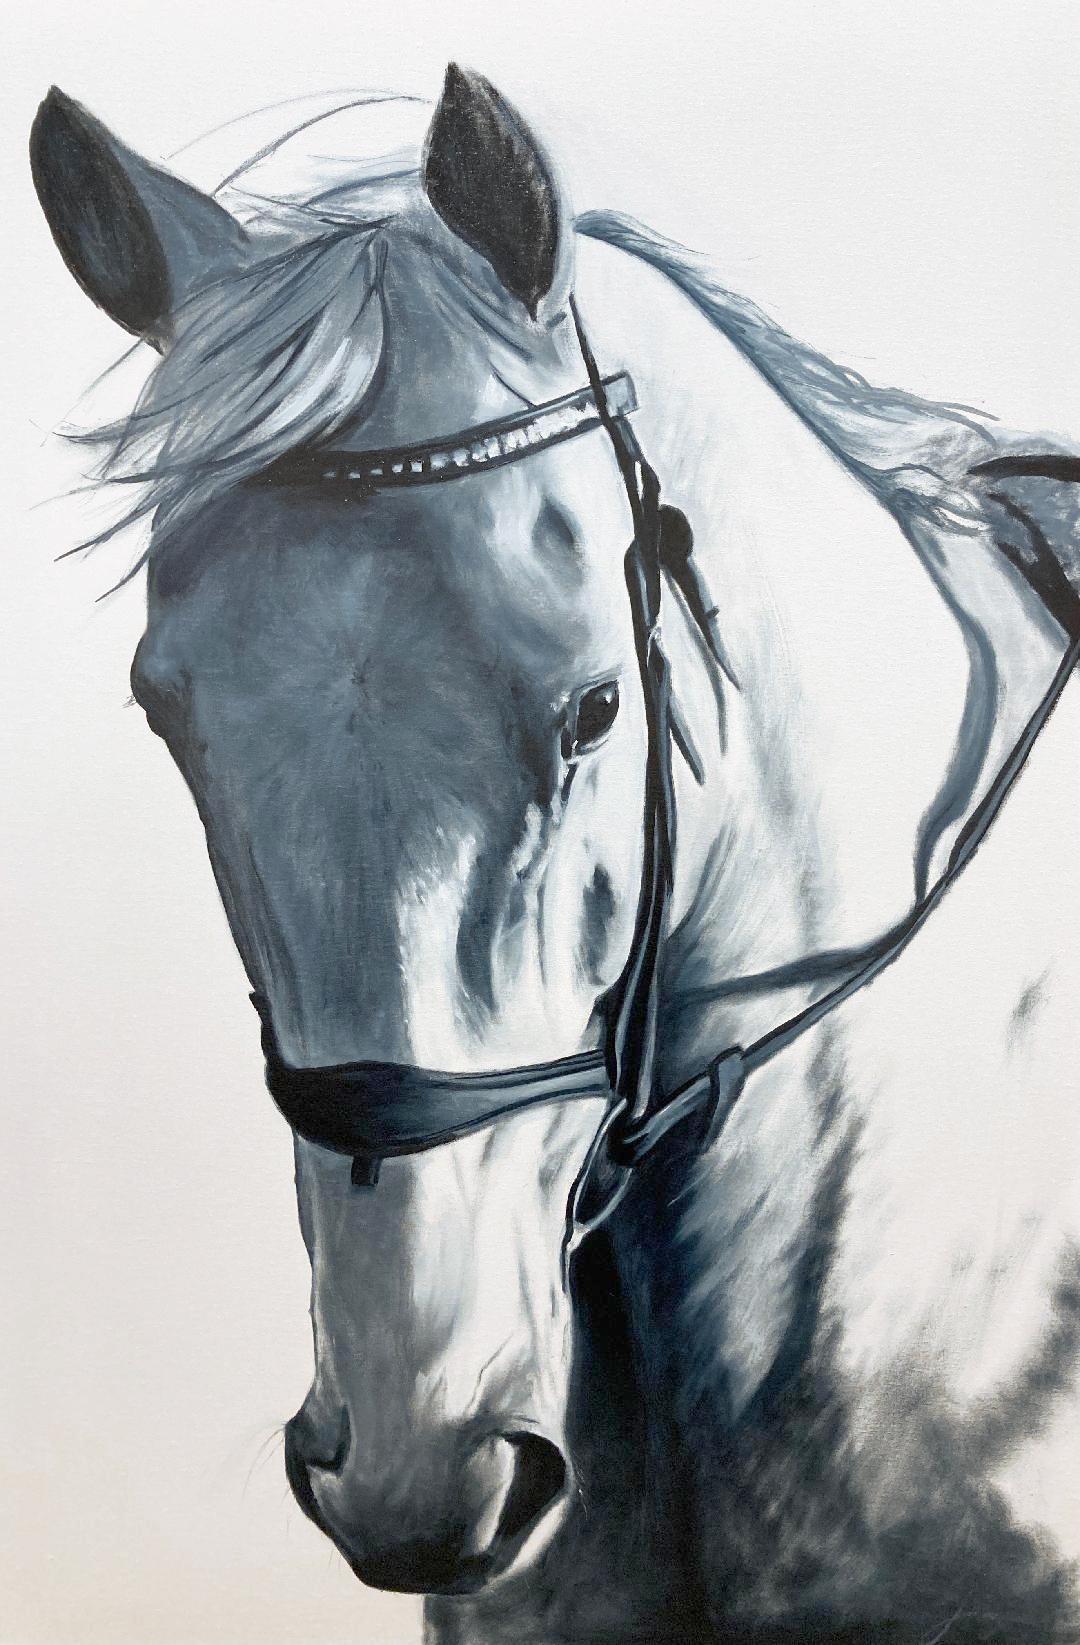 Jessica Leonard, "Indigo", 36x24 Equine Horse Oil Painting on Canvas